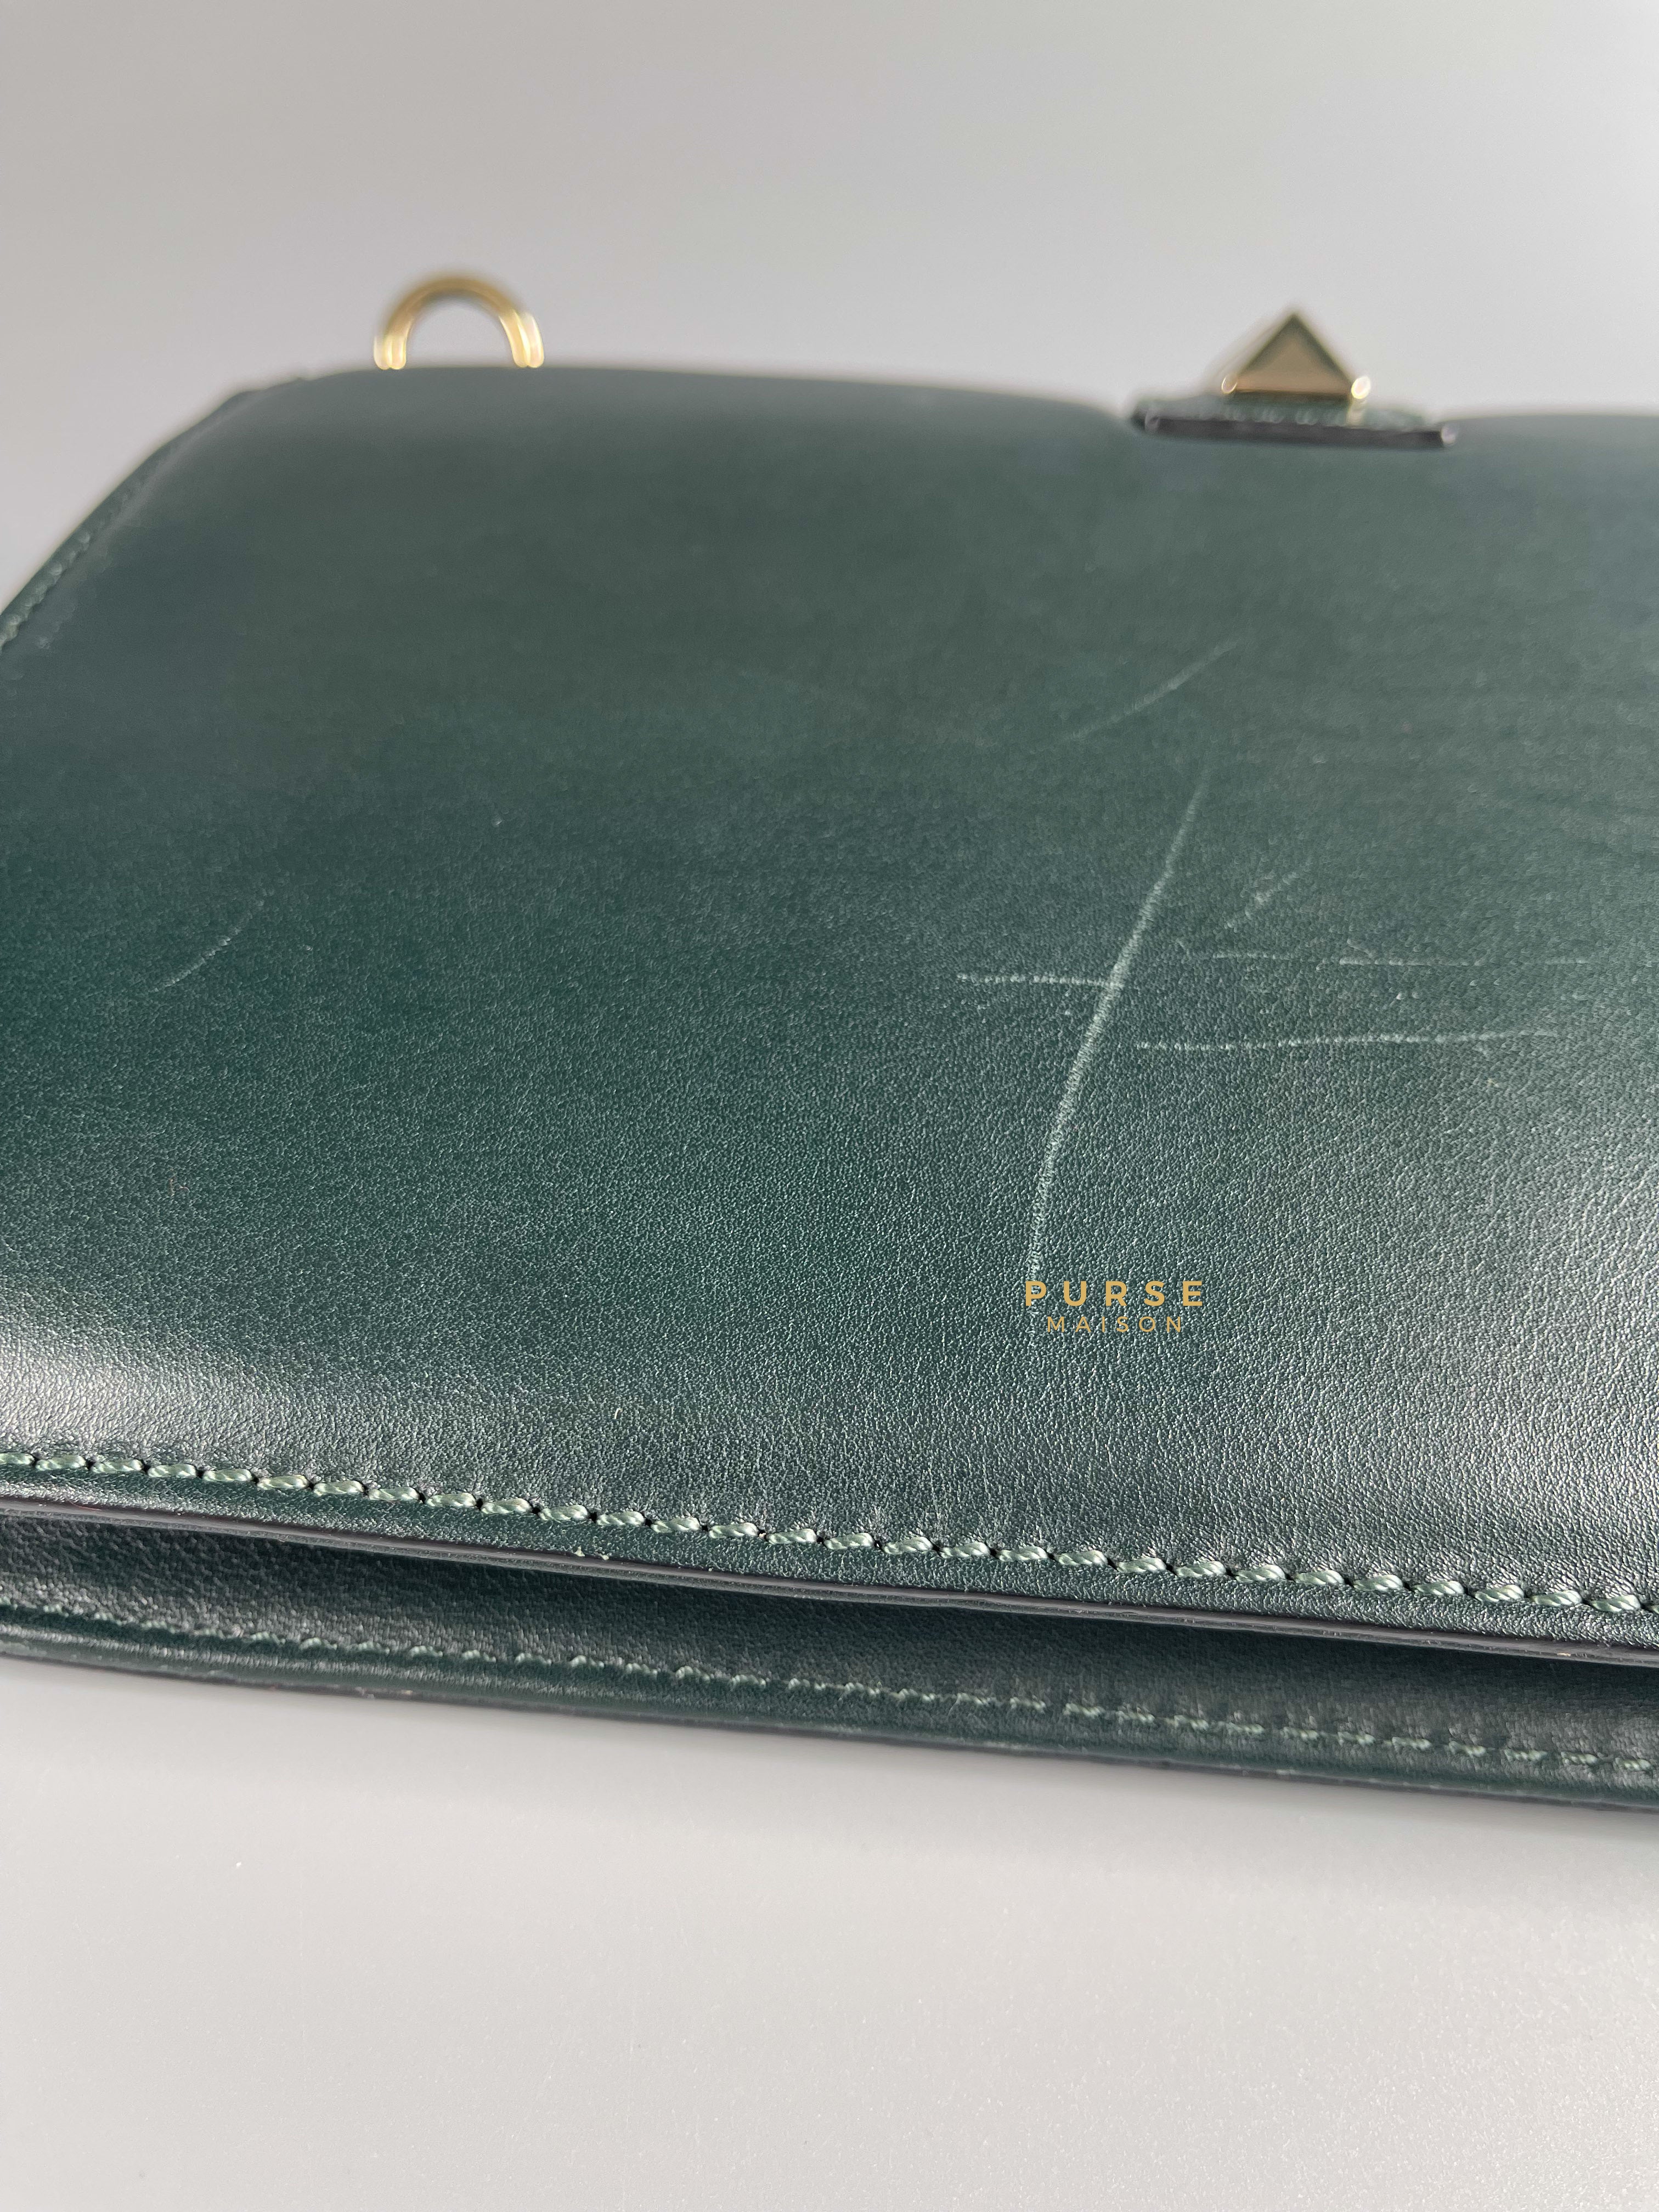 Valentino Garavani Glam Lock Flap in Medium Forest Green Leather | Purse Maison Luxury Bags Shop